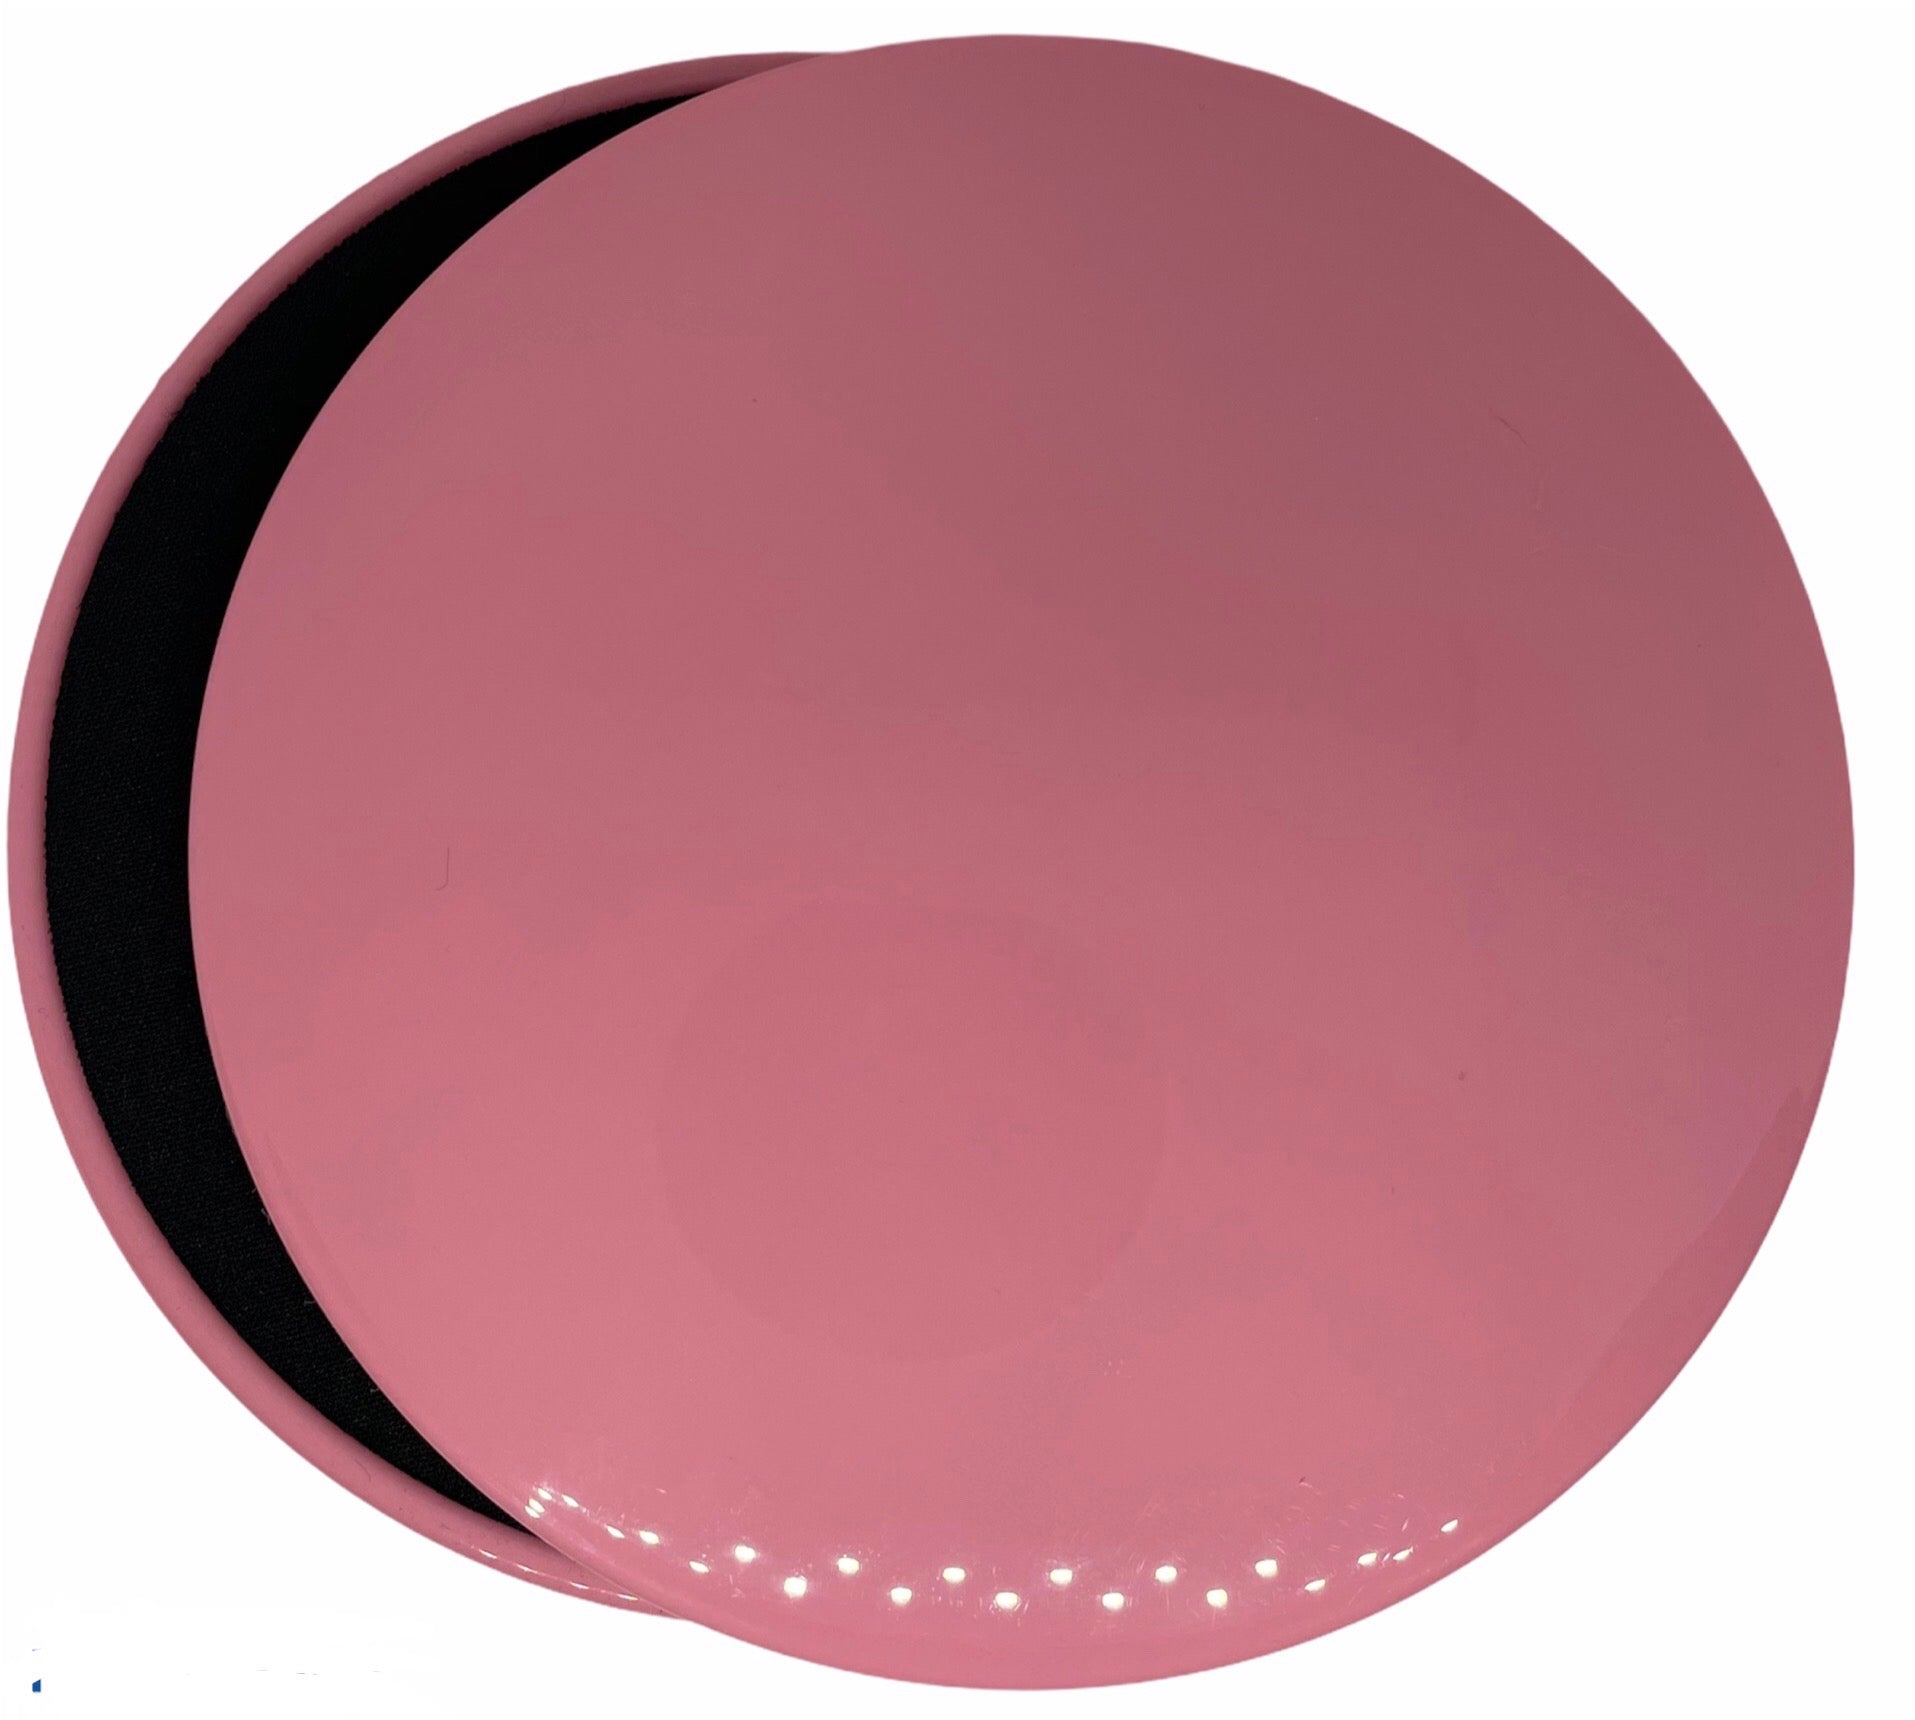 Nadora Core Gliders - Pink